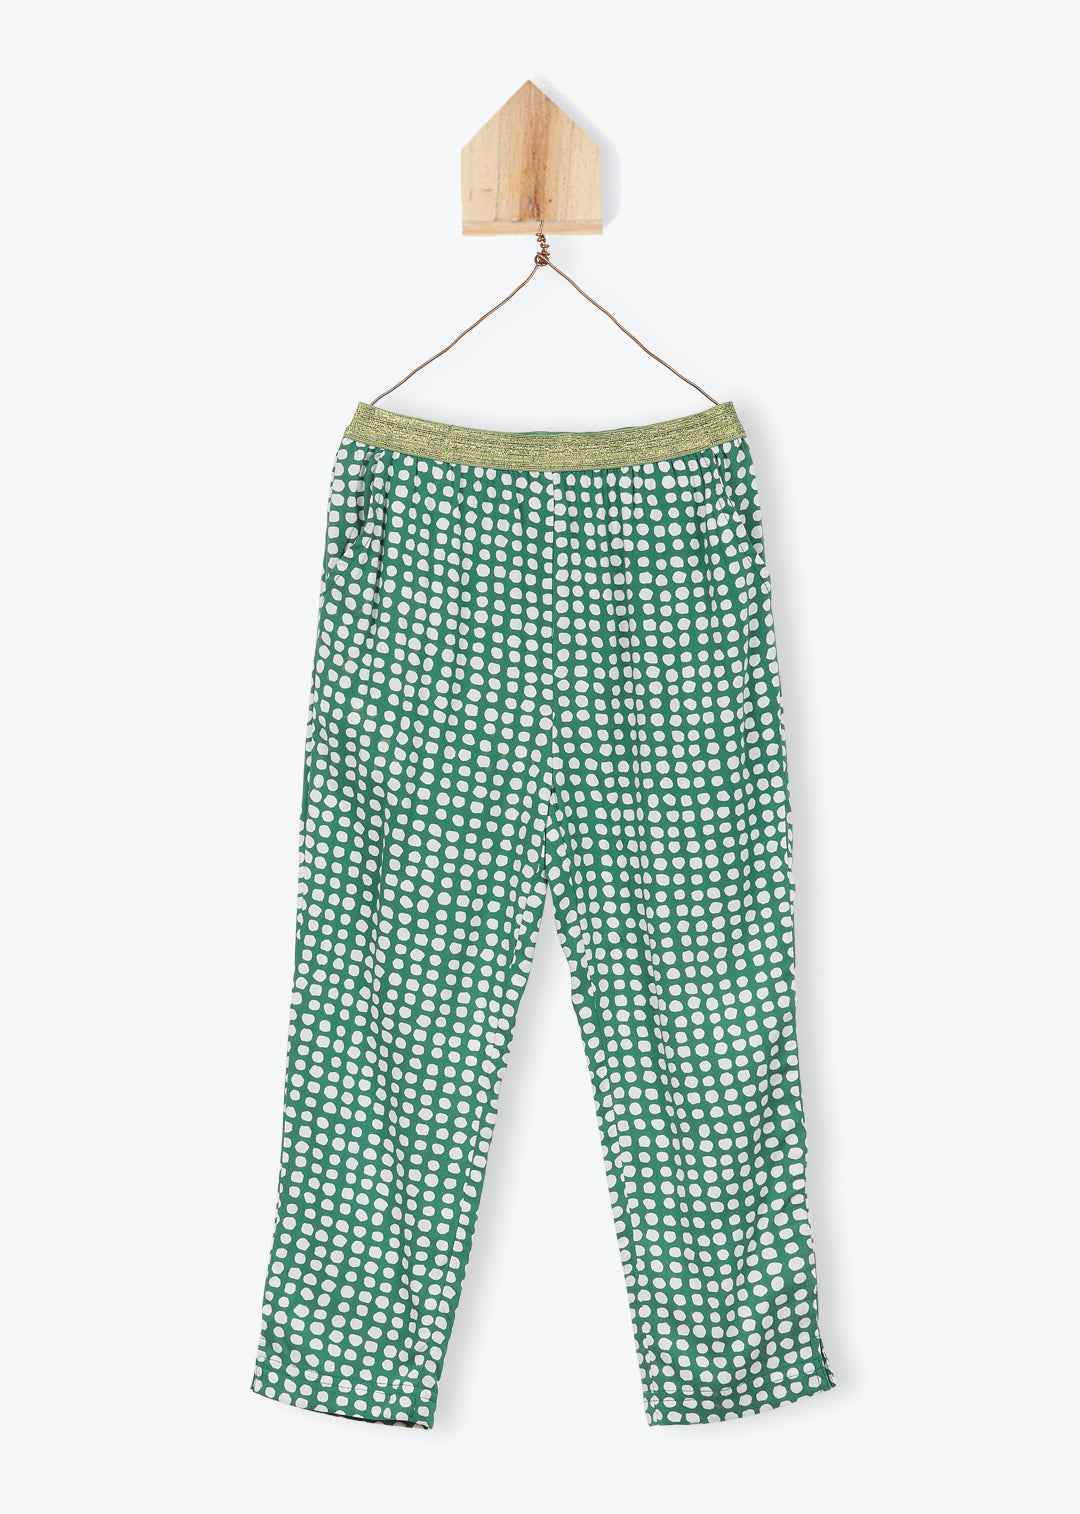 Trousers Girl Polka Dot Print - قصيرة